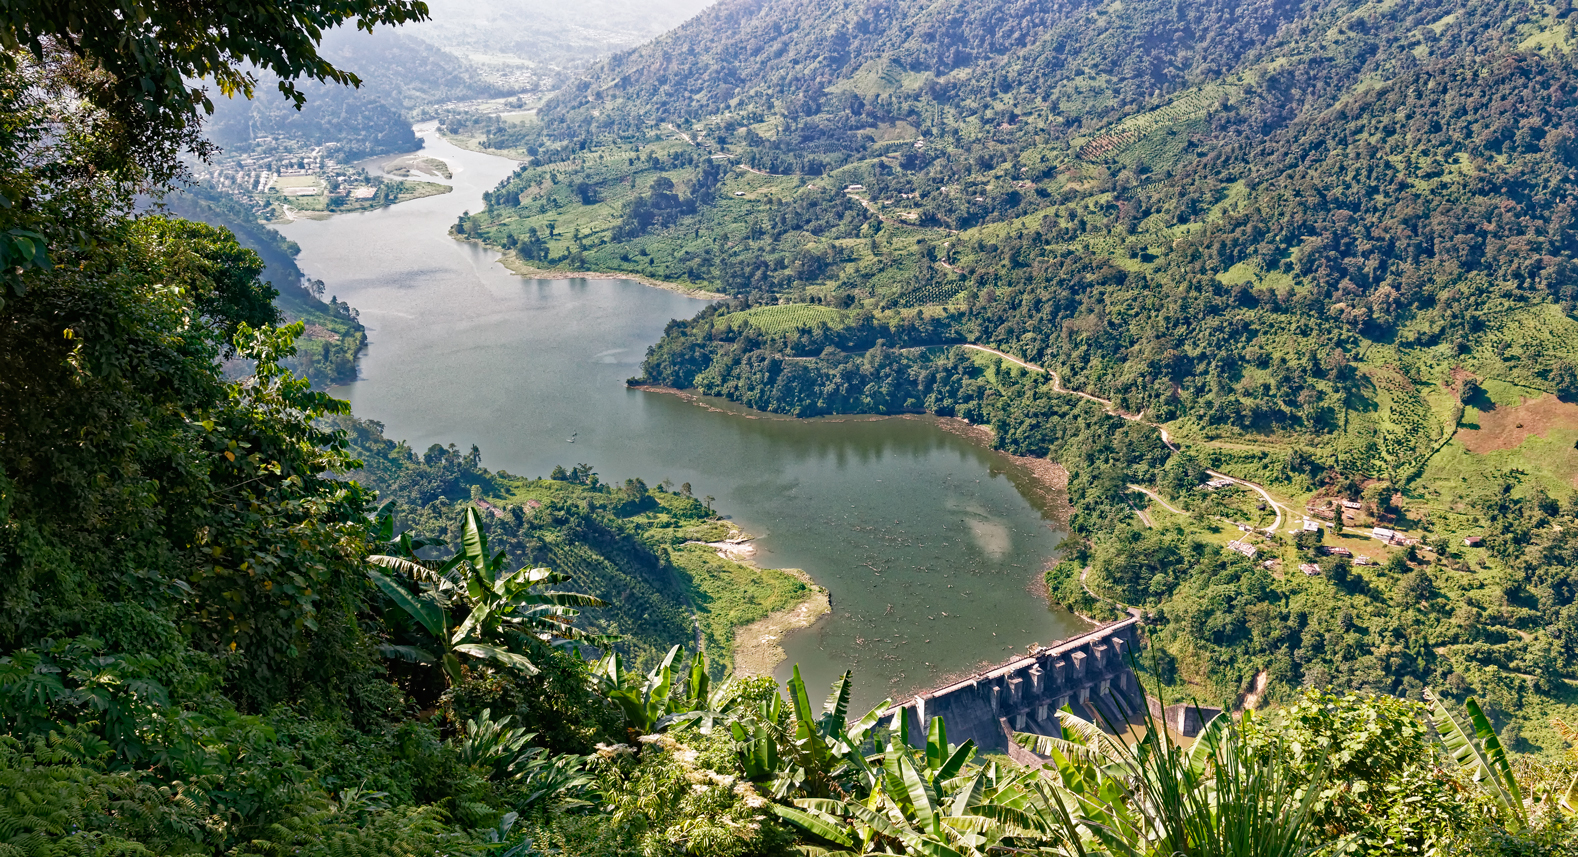 Ranganadi Dam in Lower Subansiri district of Arunachal Pradesh has met its annual production target just once